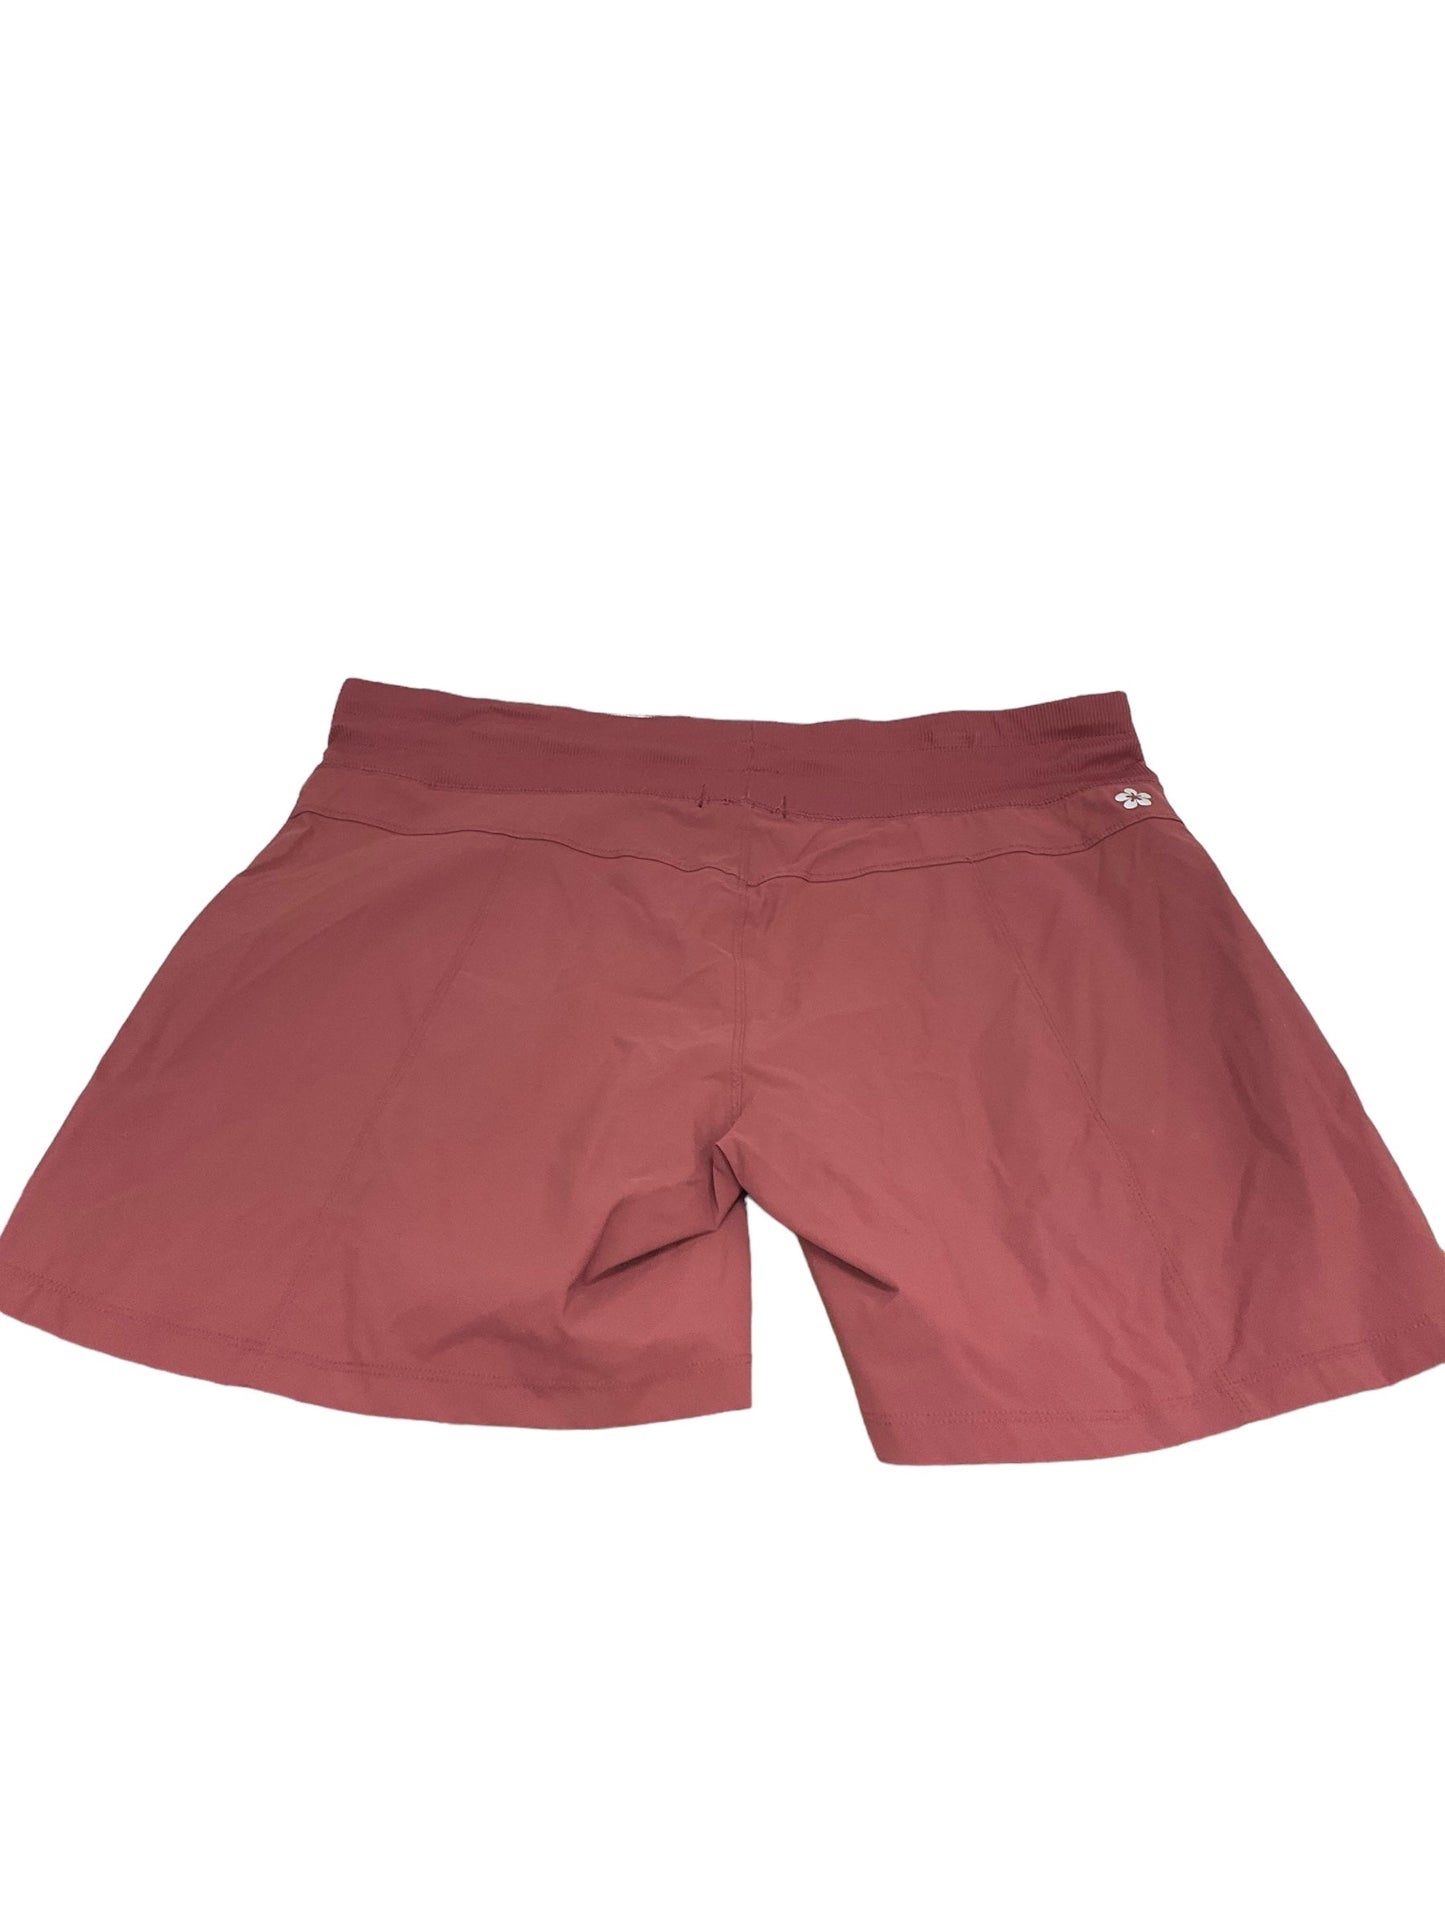 Athletic Shorts By Tuff Athletics  Size: Xl